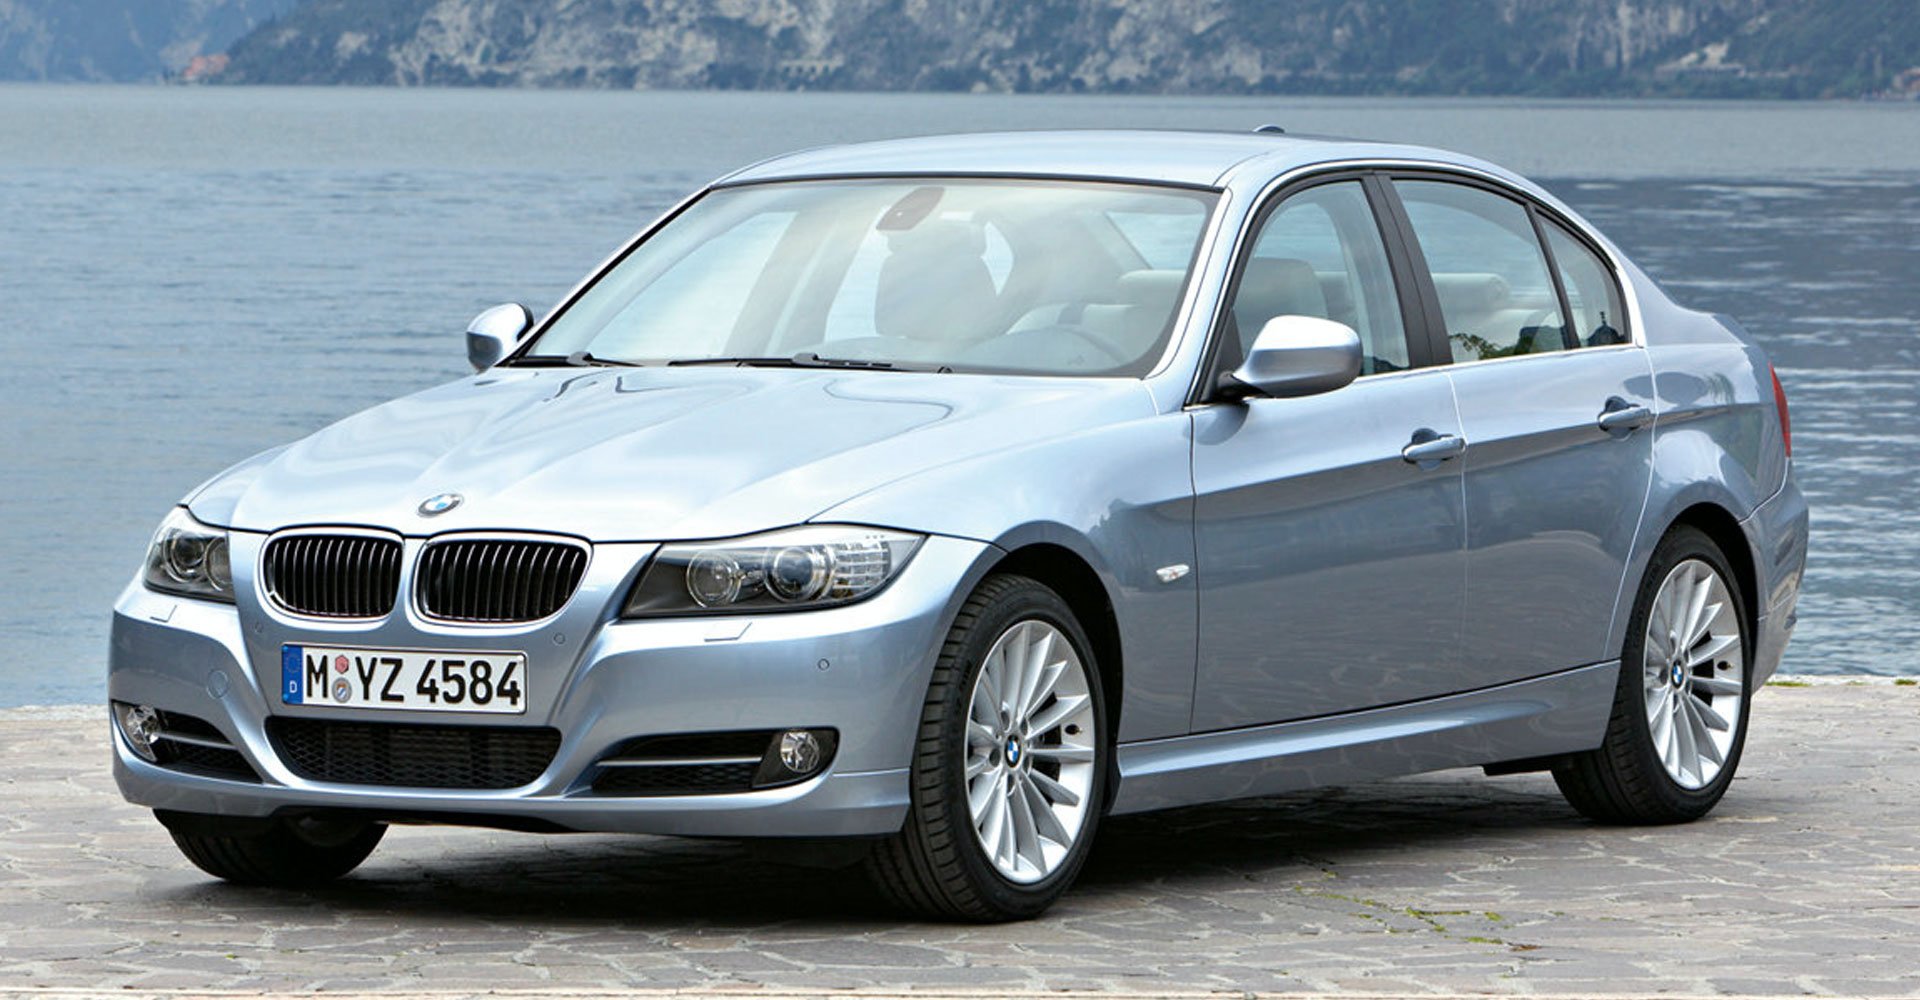 BMW 3 Series E90/E91/E92/E93 2005-2012, BMW 3 Series (E90/E91/E92